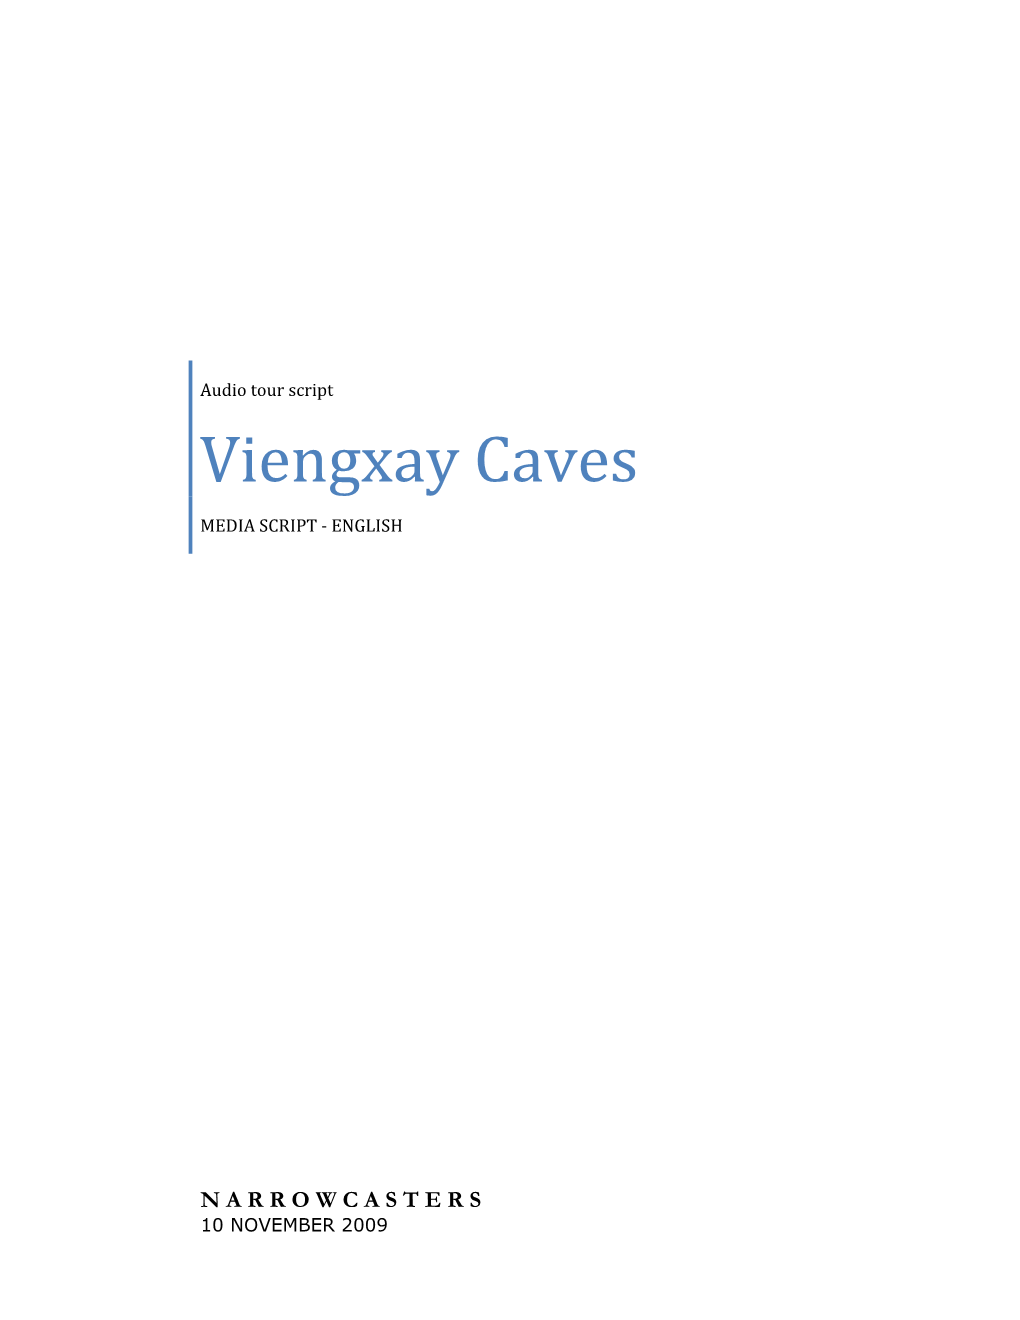 Viengxay Caves